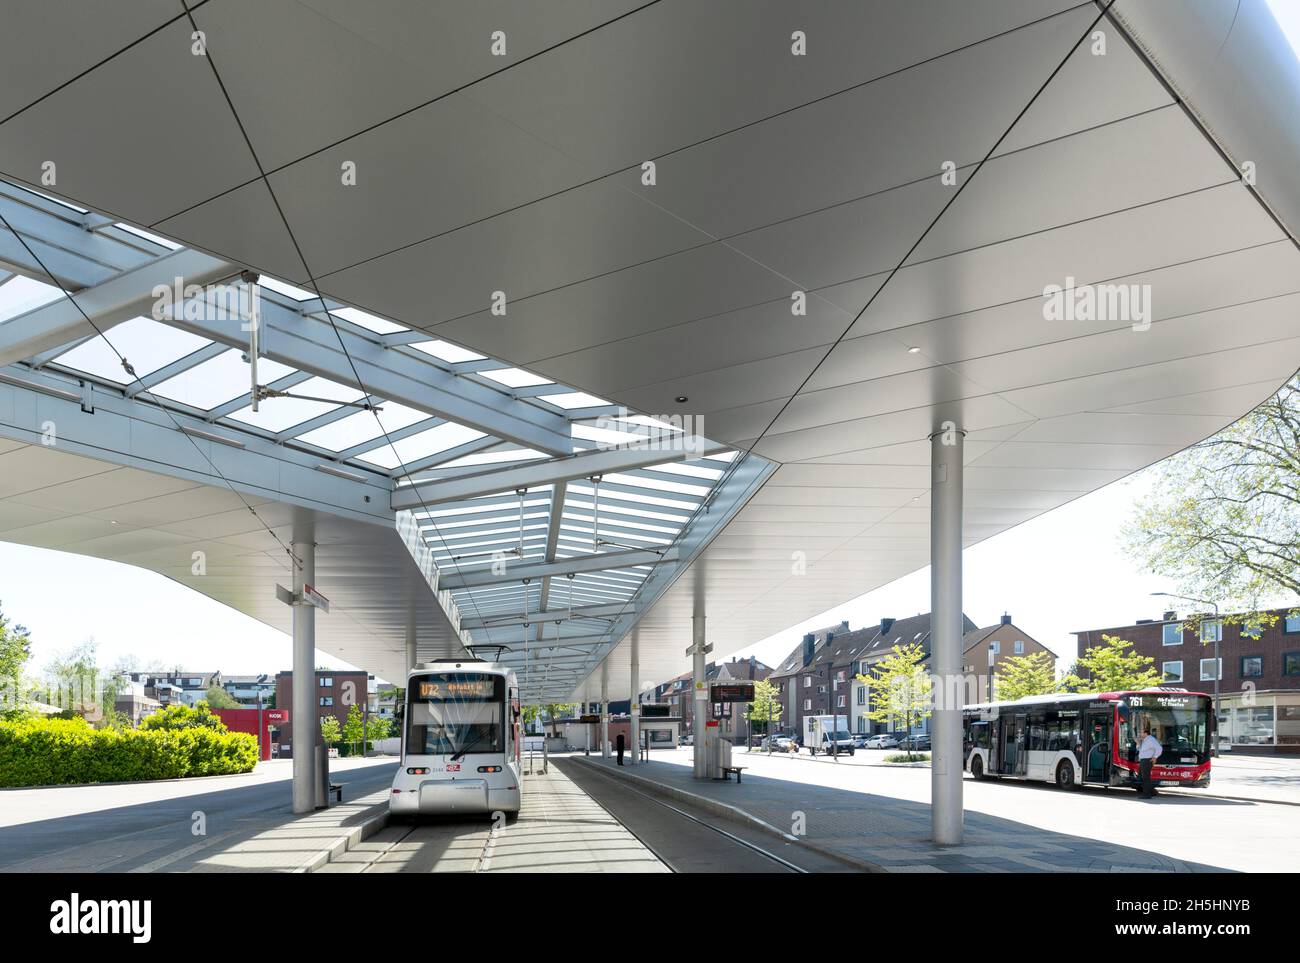 Central bus station and tram junction, Rheinbahn, Ratingen, Rhineland, North Rhine-Westphalia, Germany Stock Photo